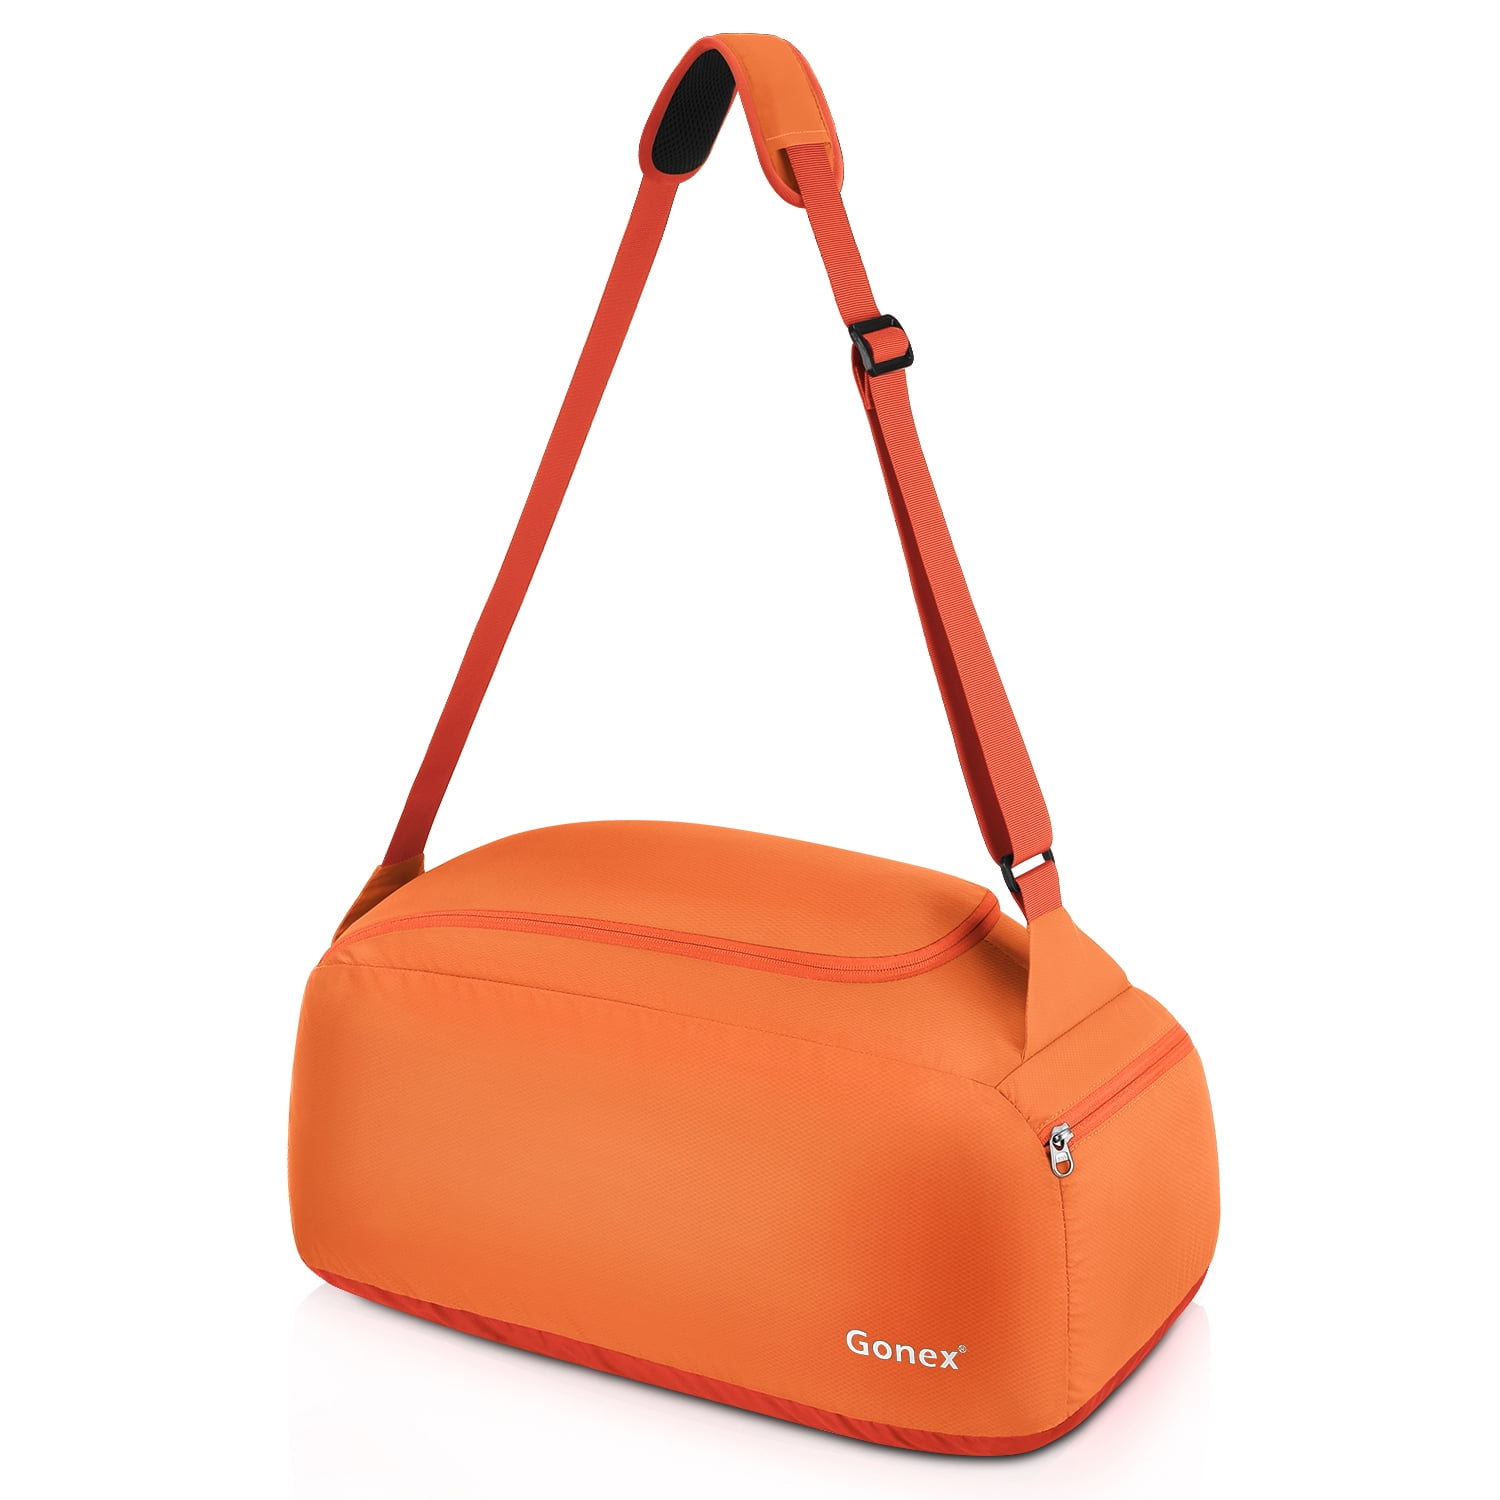 Gonex Handy Small Duffel Bag, Packable Travel Duffle Shoulder Bag 38L 7 Colors Choices - Walmart ...